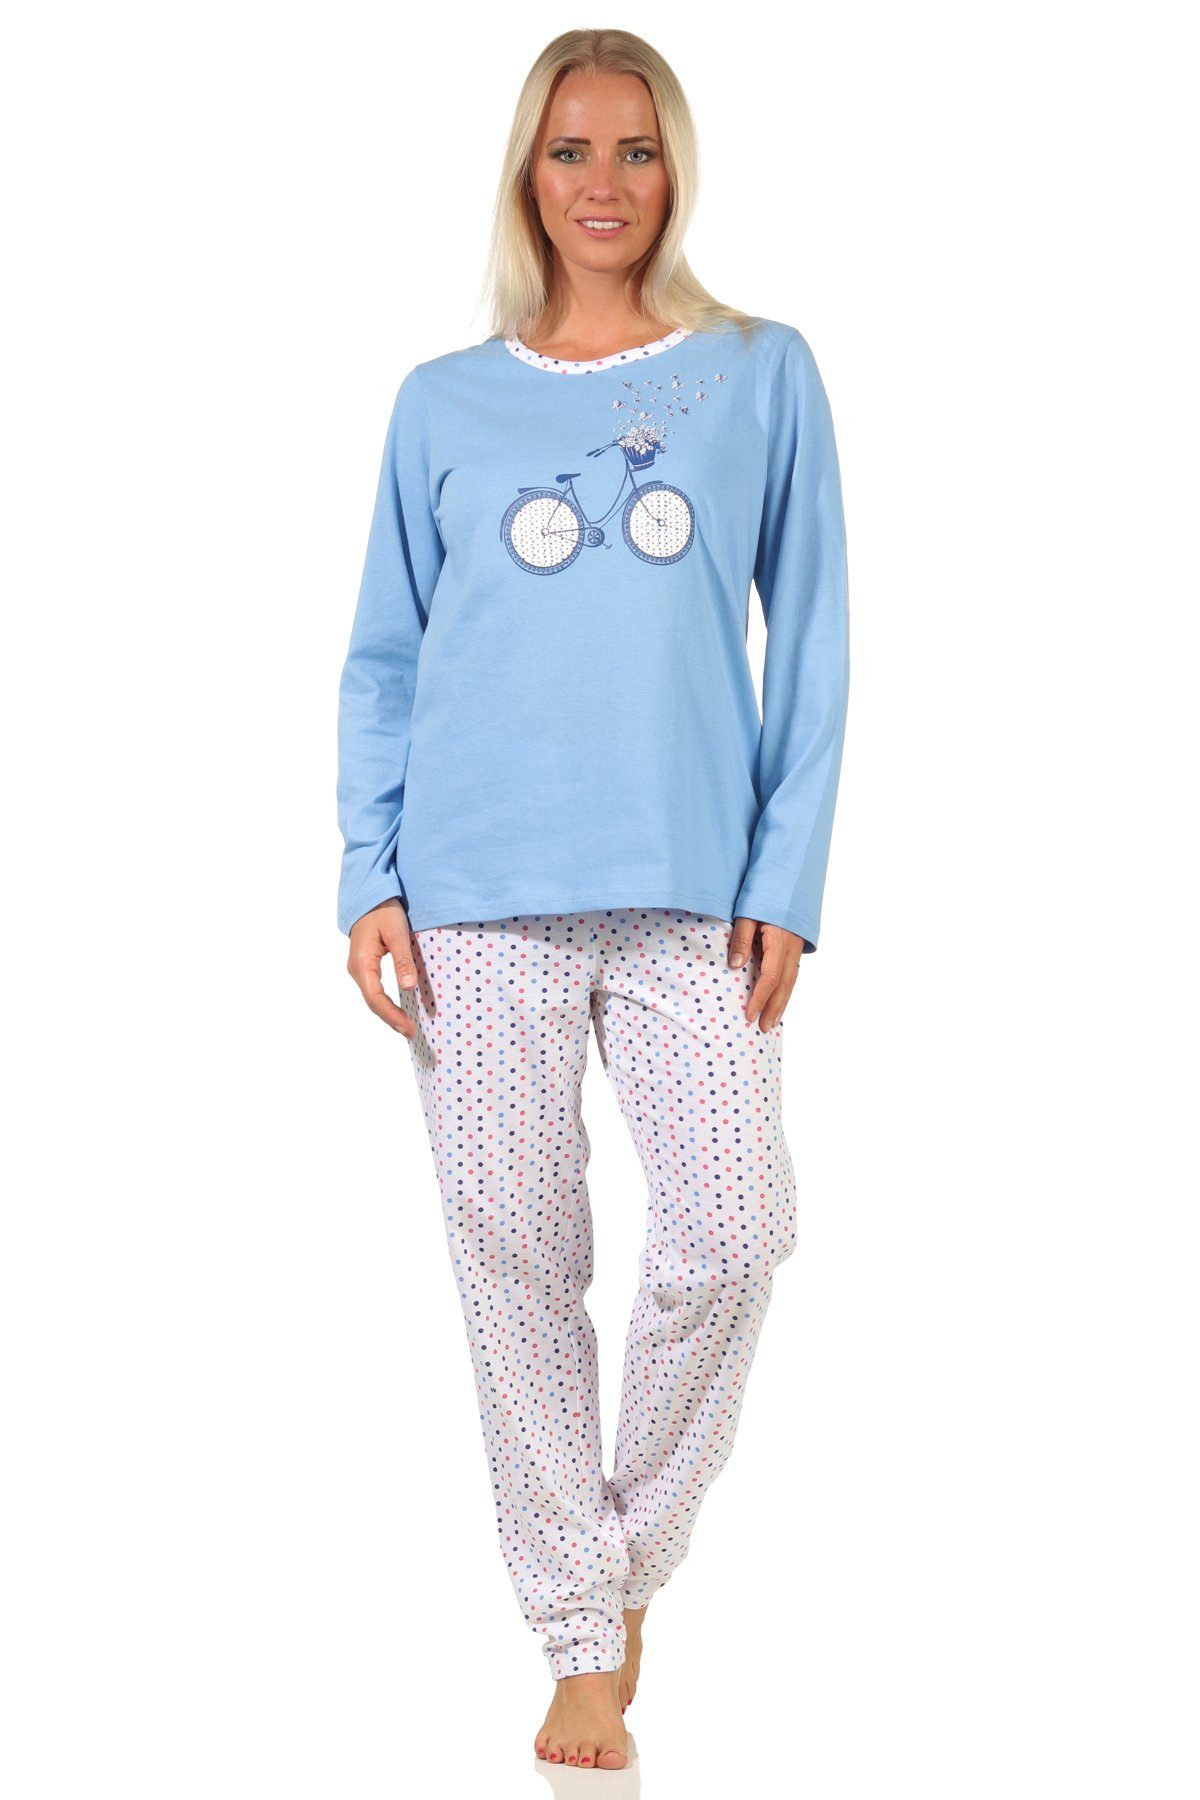 by RELAX Optik Pyjama frühlingshafter Punkten Pyjama blau in Schlafanzug Normann Damen mit langarm